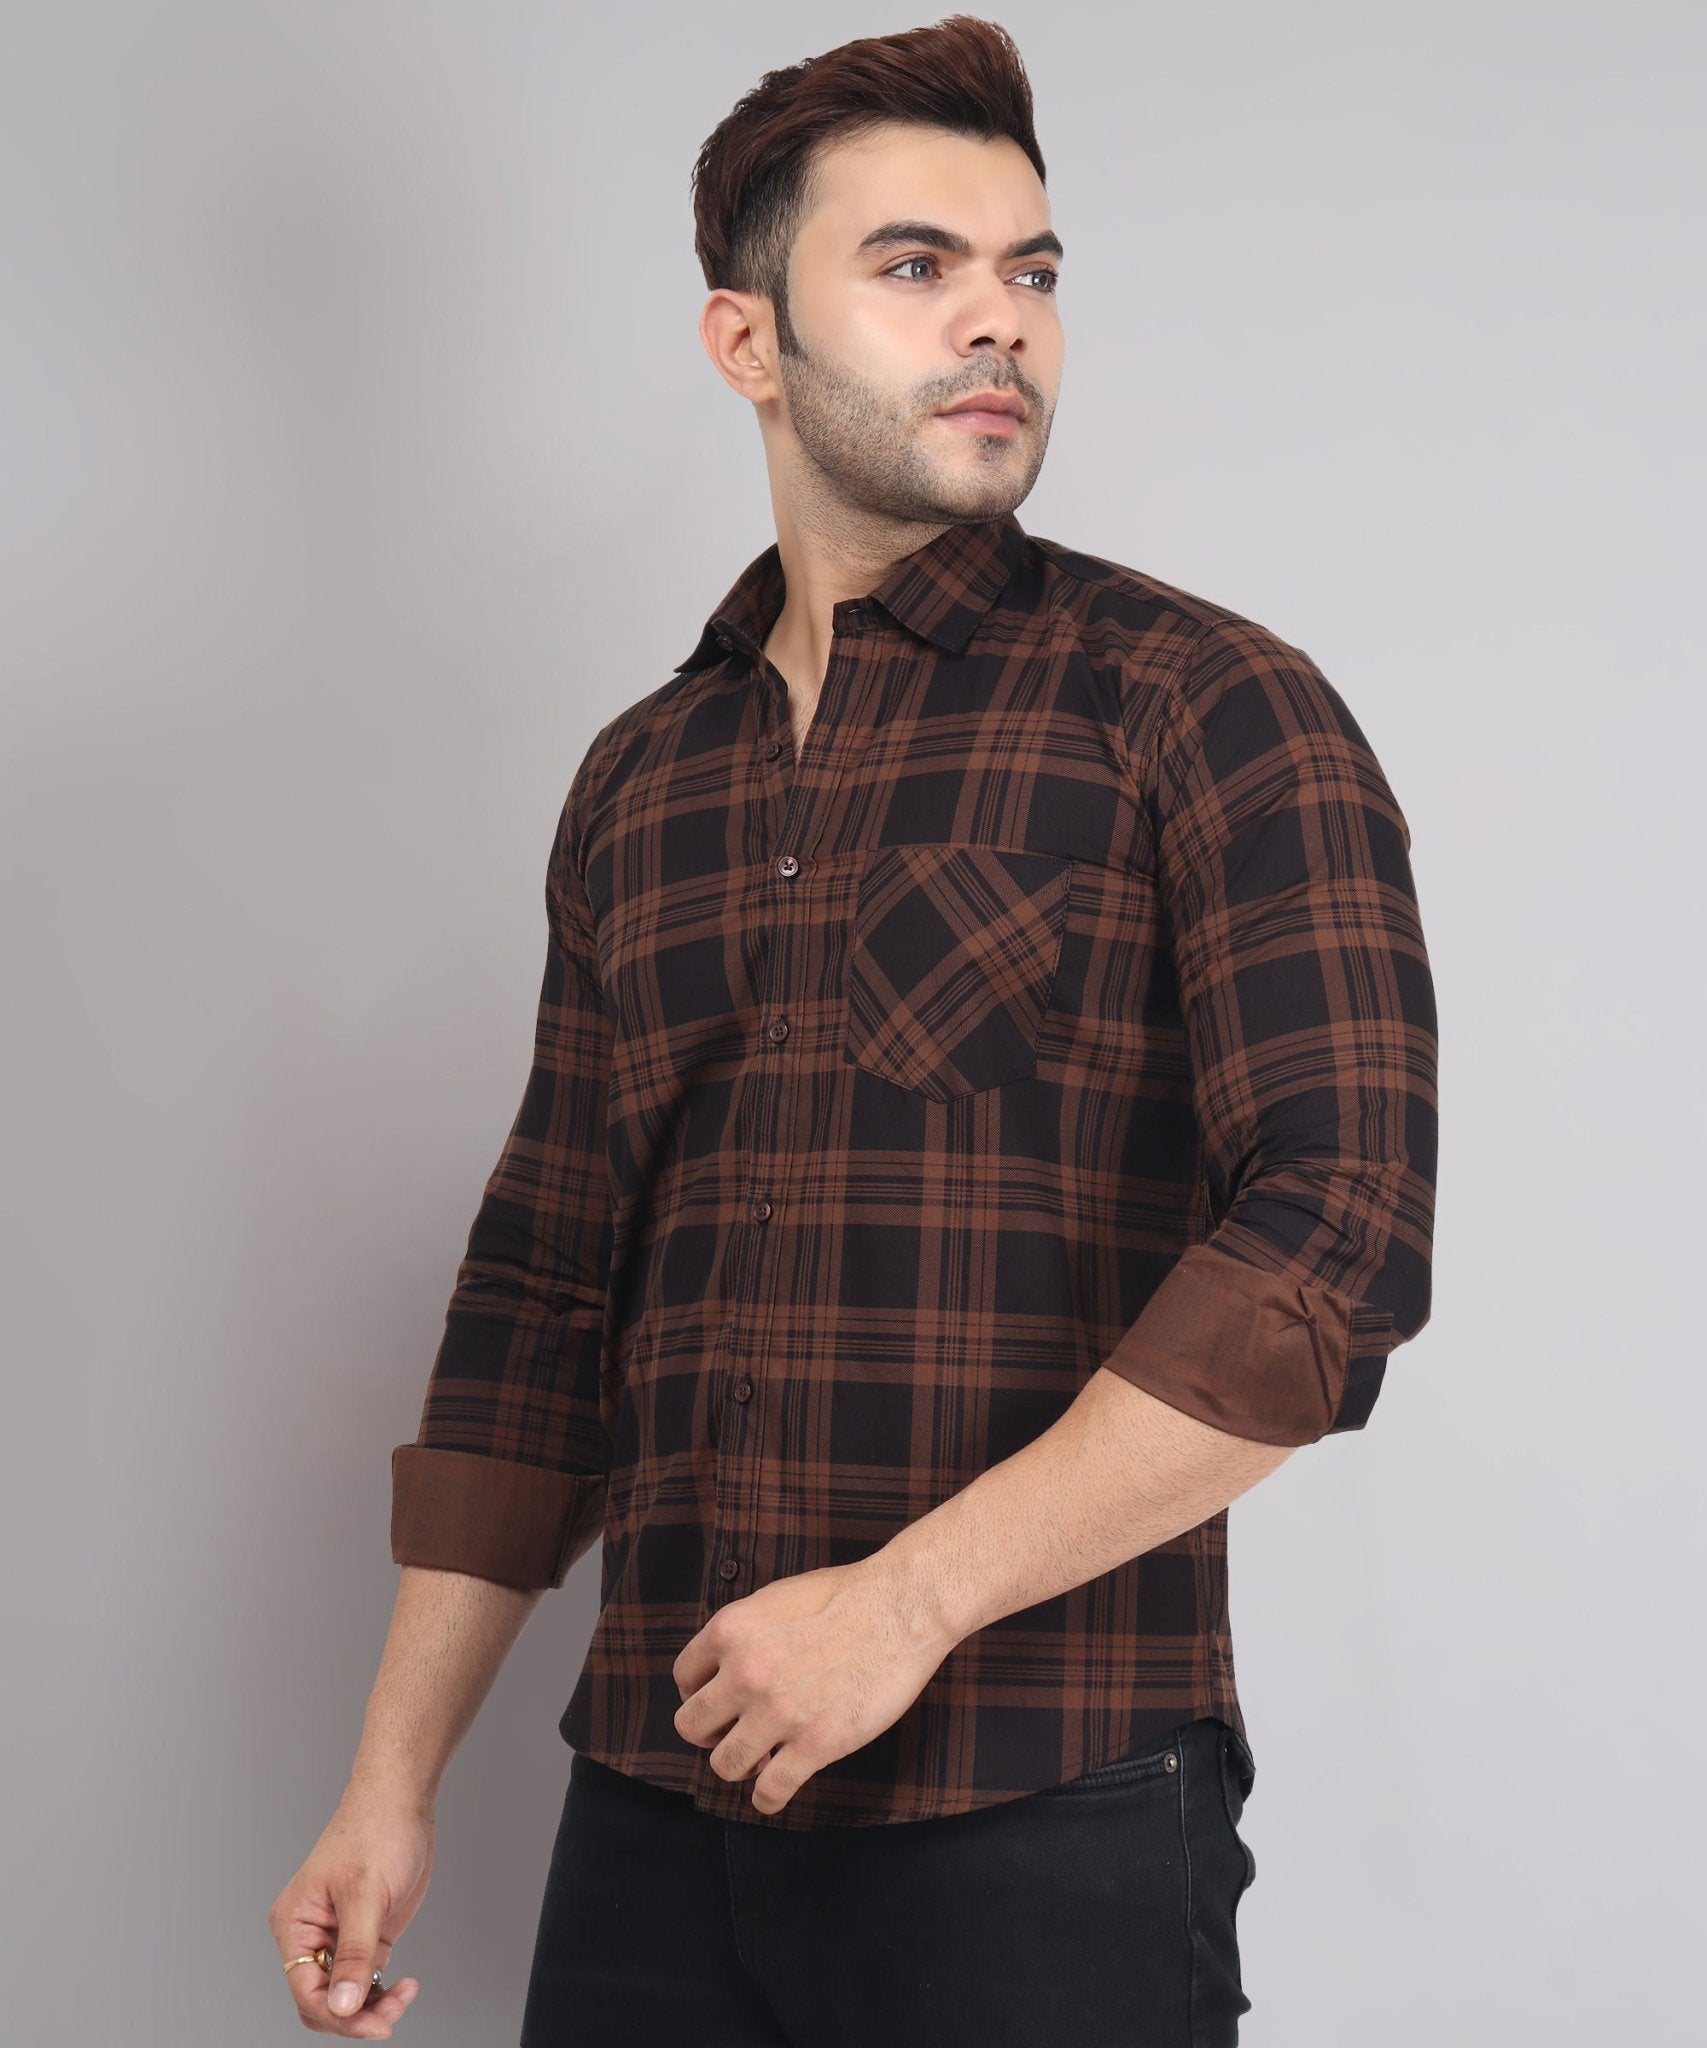 TryBuy Premium Robert Brown Black Checks Cotton Casual Shirts for Men - TryBuy® USA🇺🇸